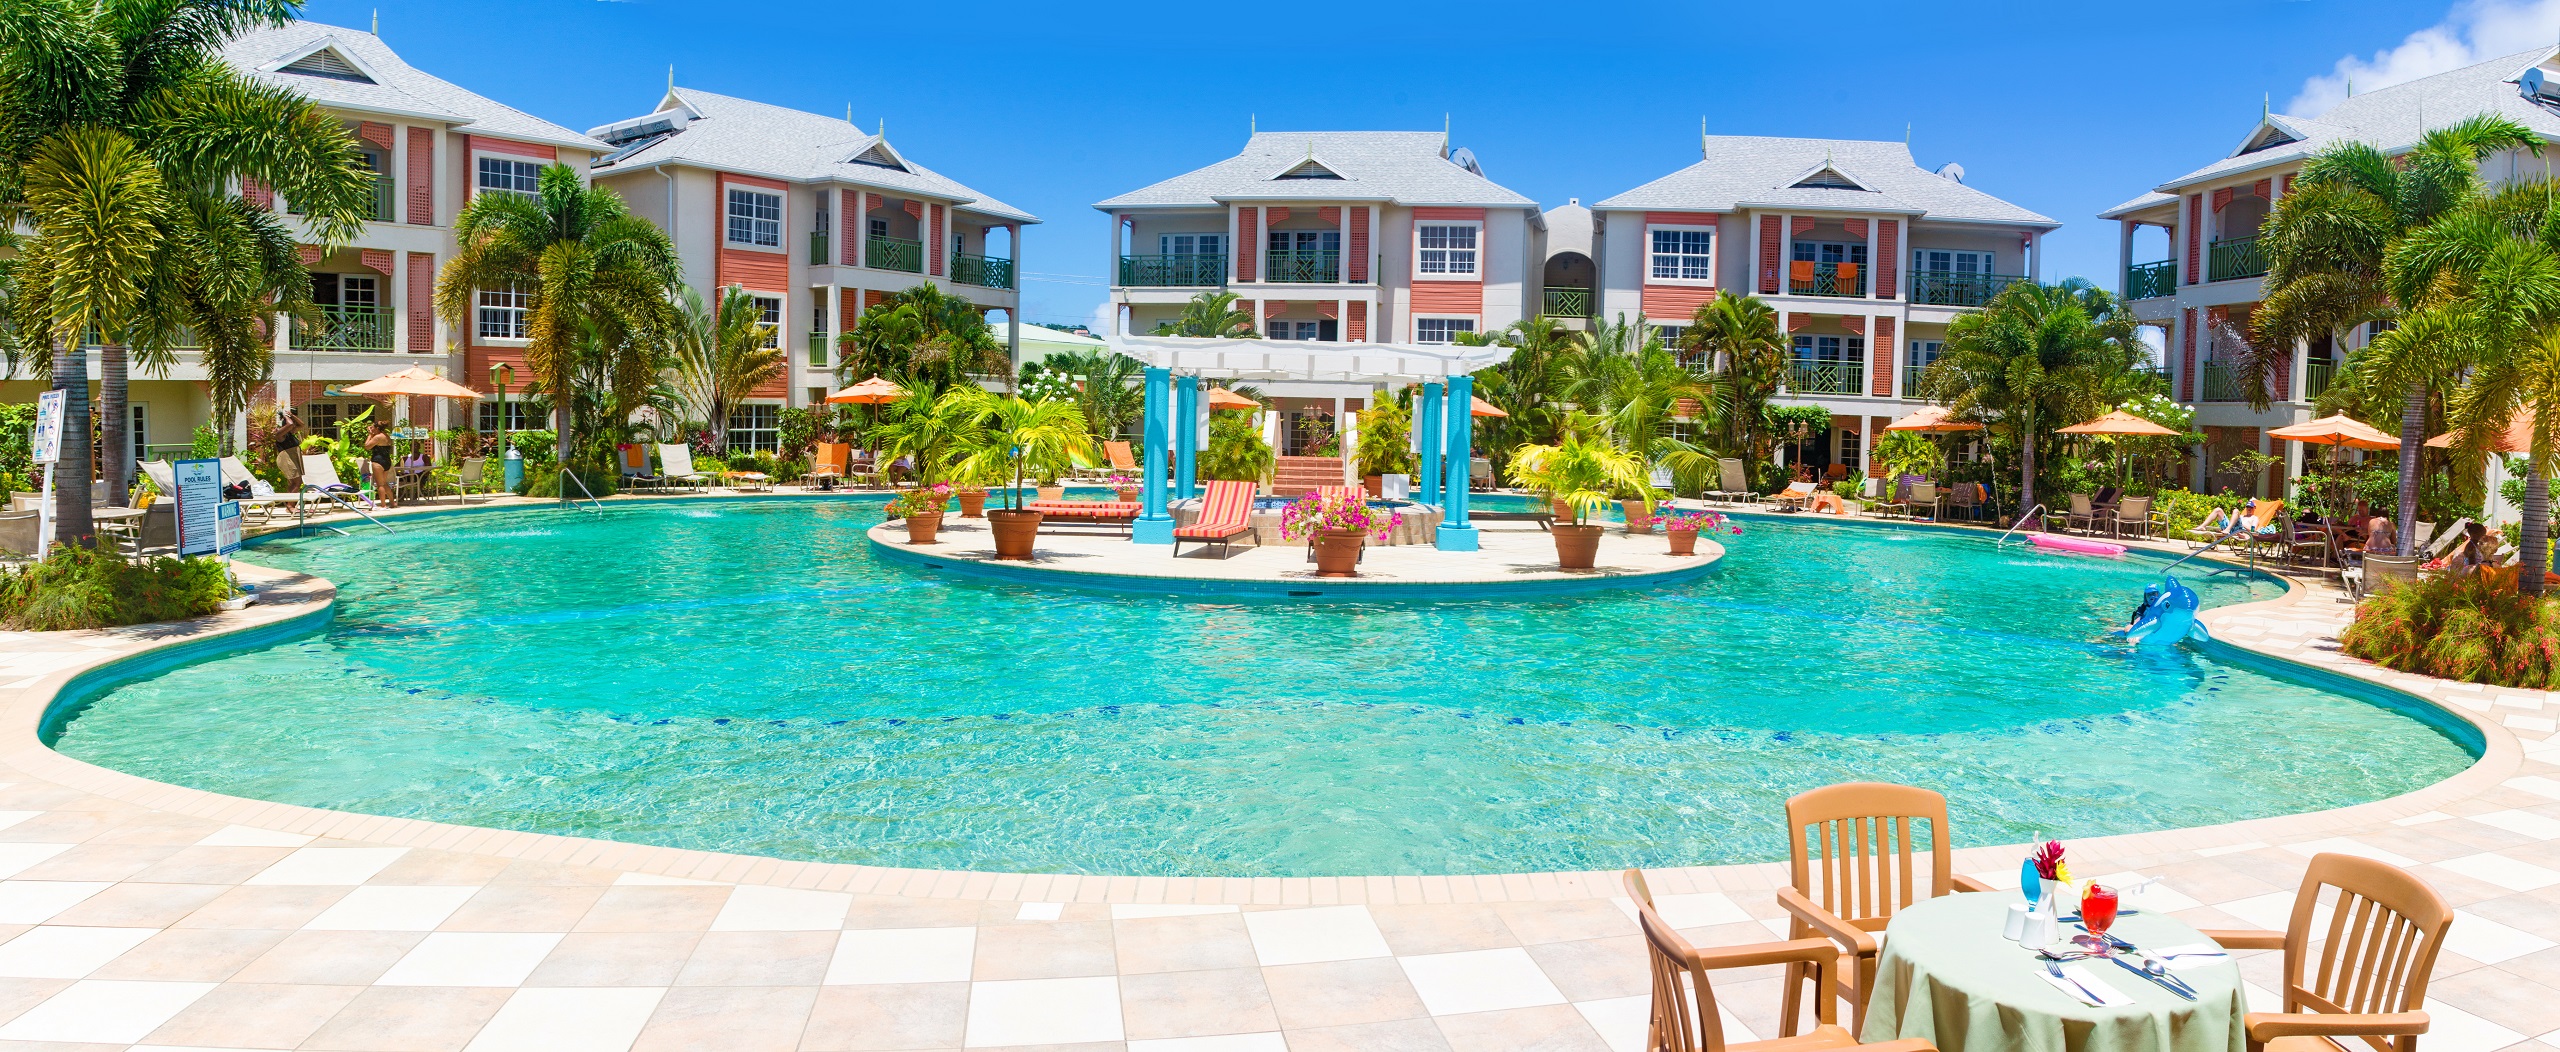 Bay Gardens Beach Resort - Destination Saint Lucia Product Guide